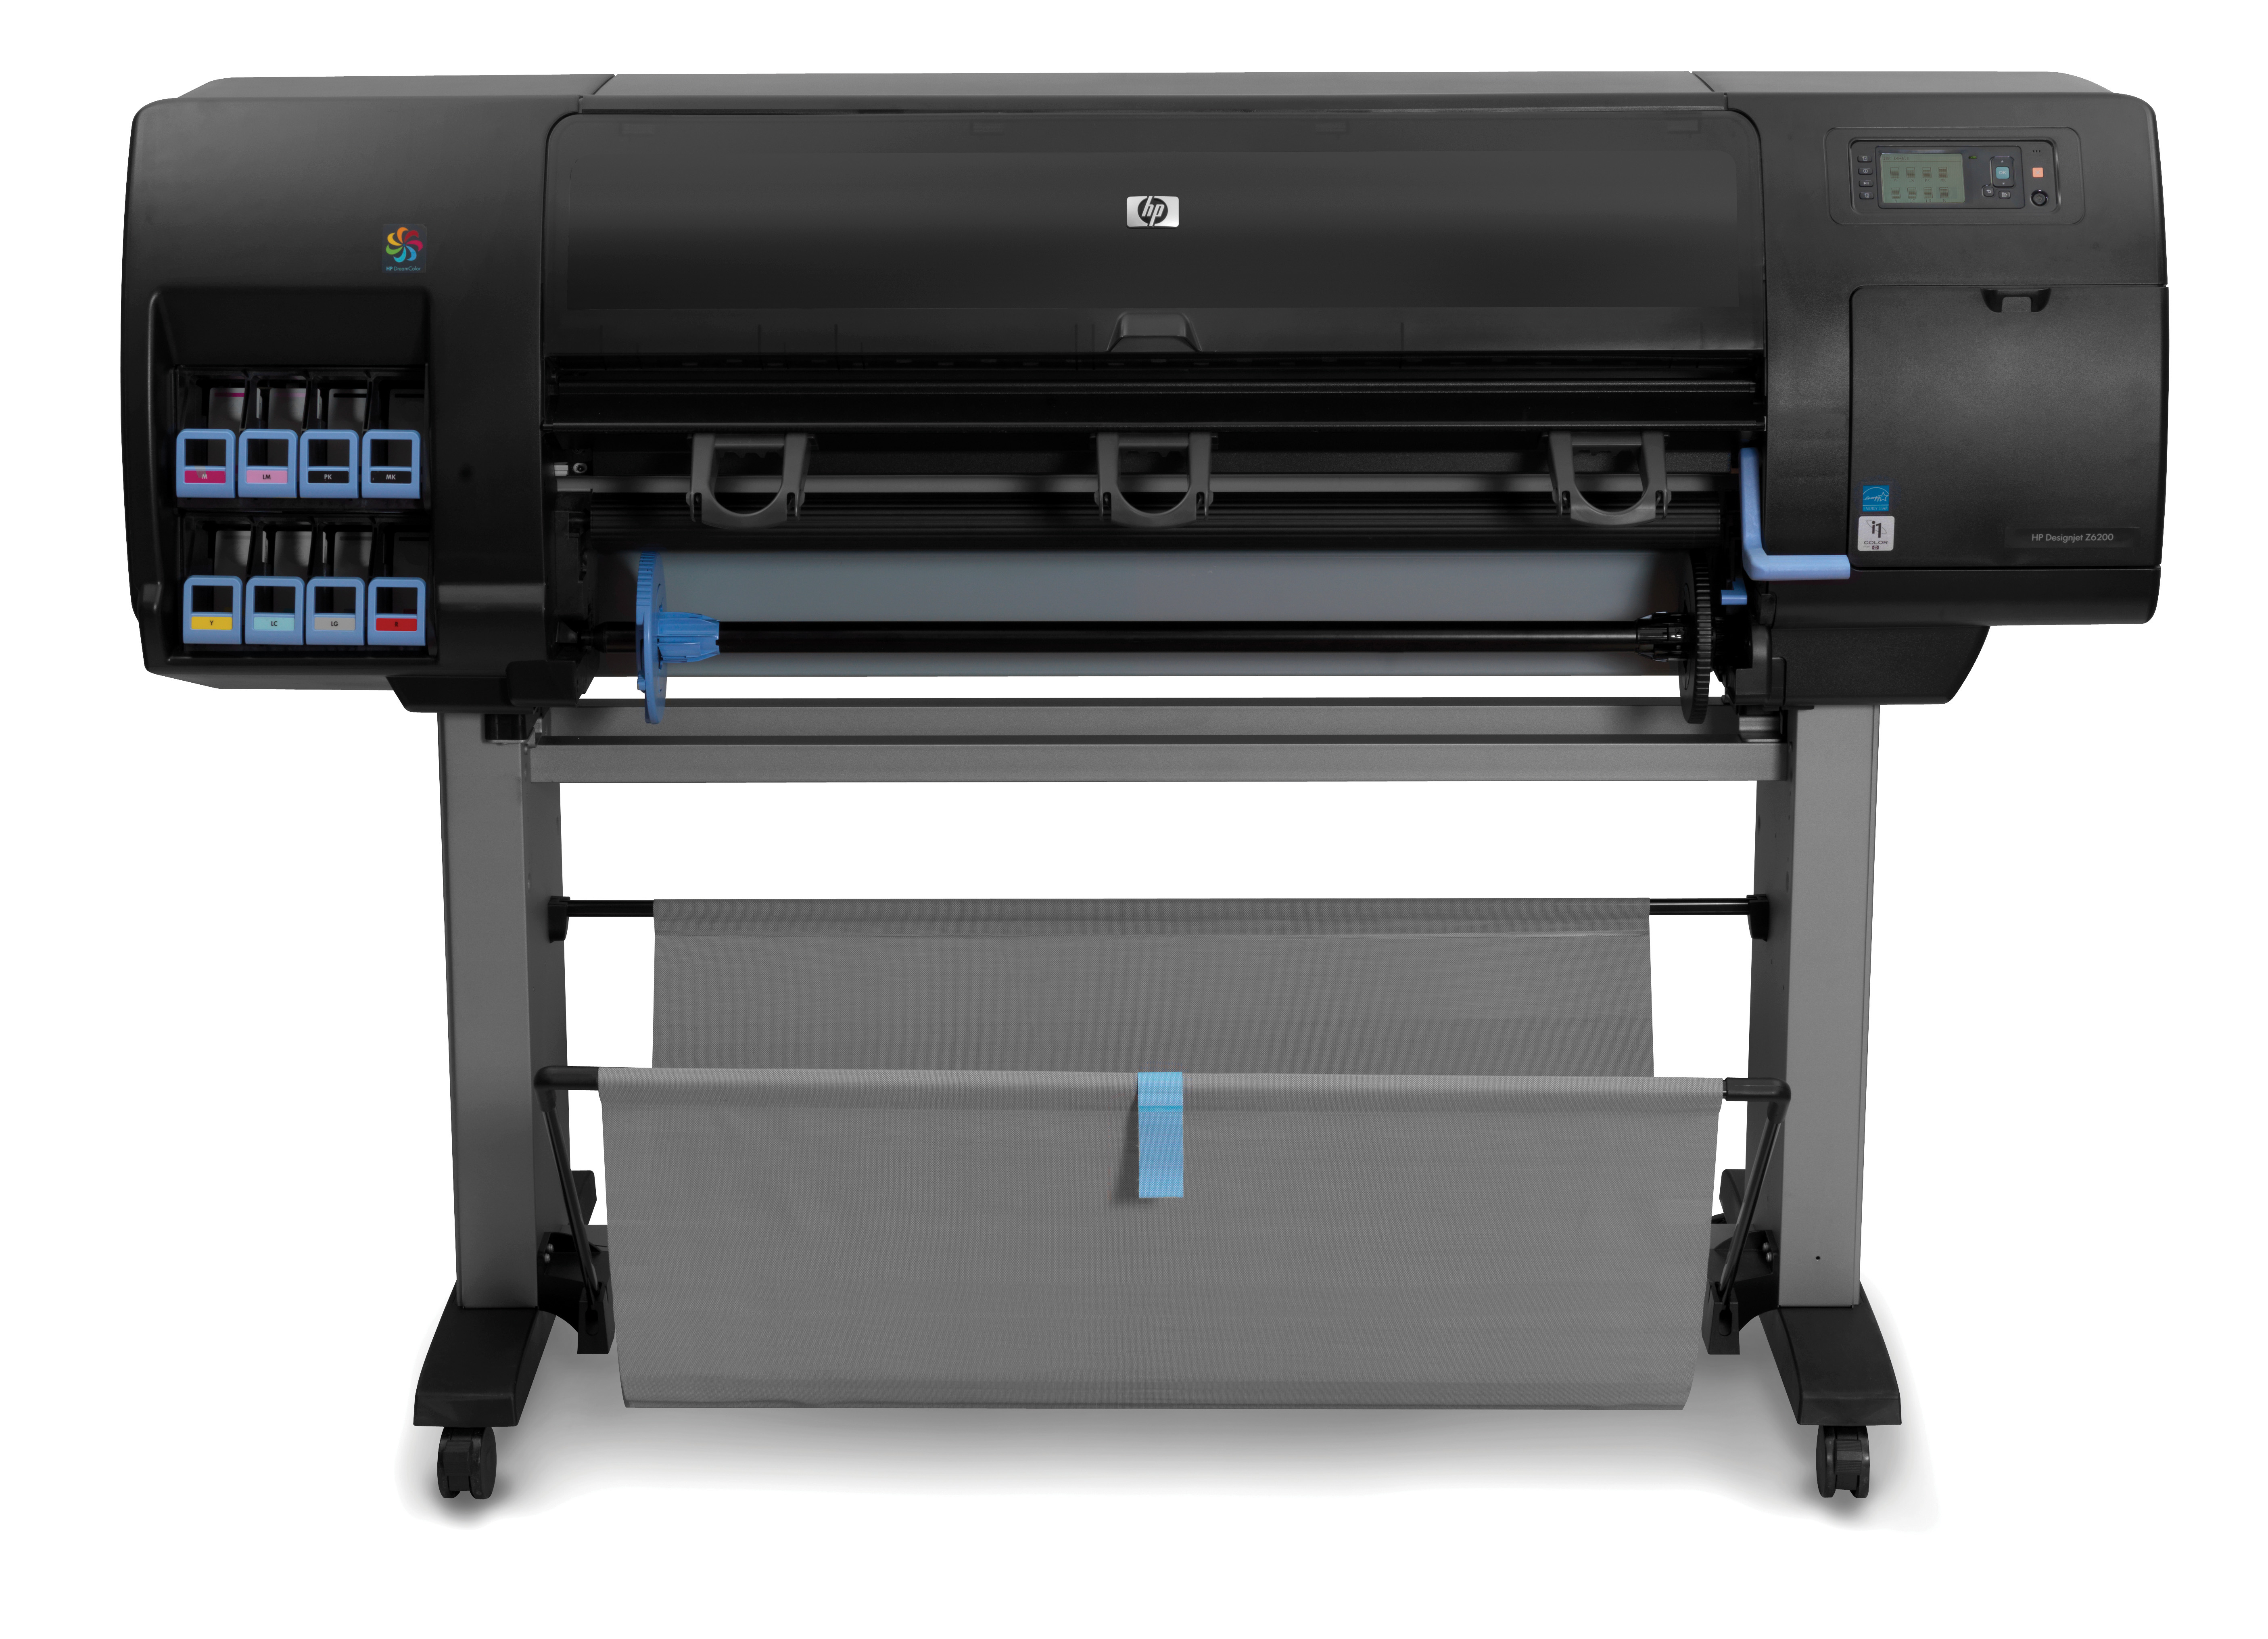 CQ109A HP Designjet Z6200 A0 42" Printer - Refurbished